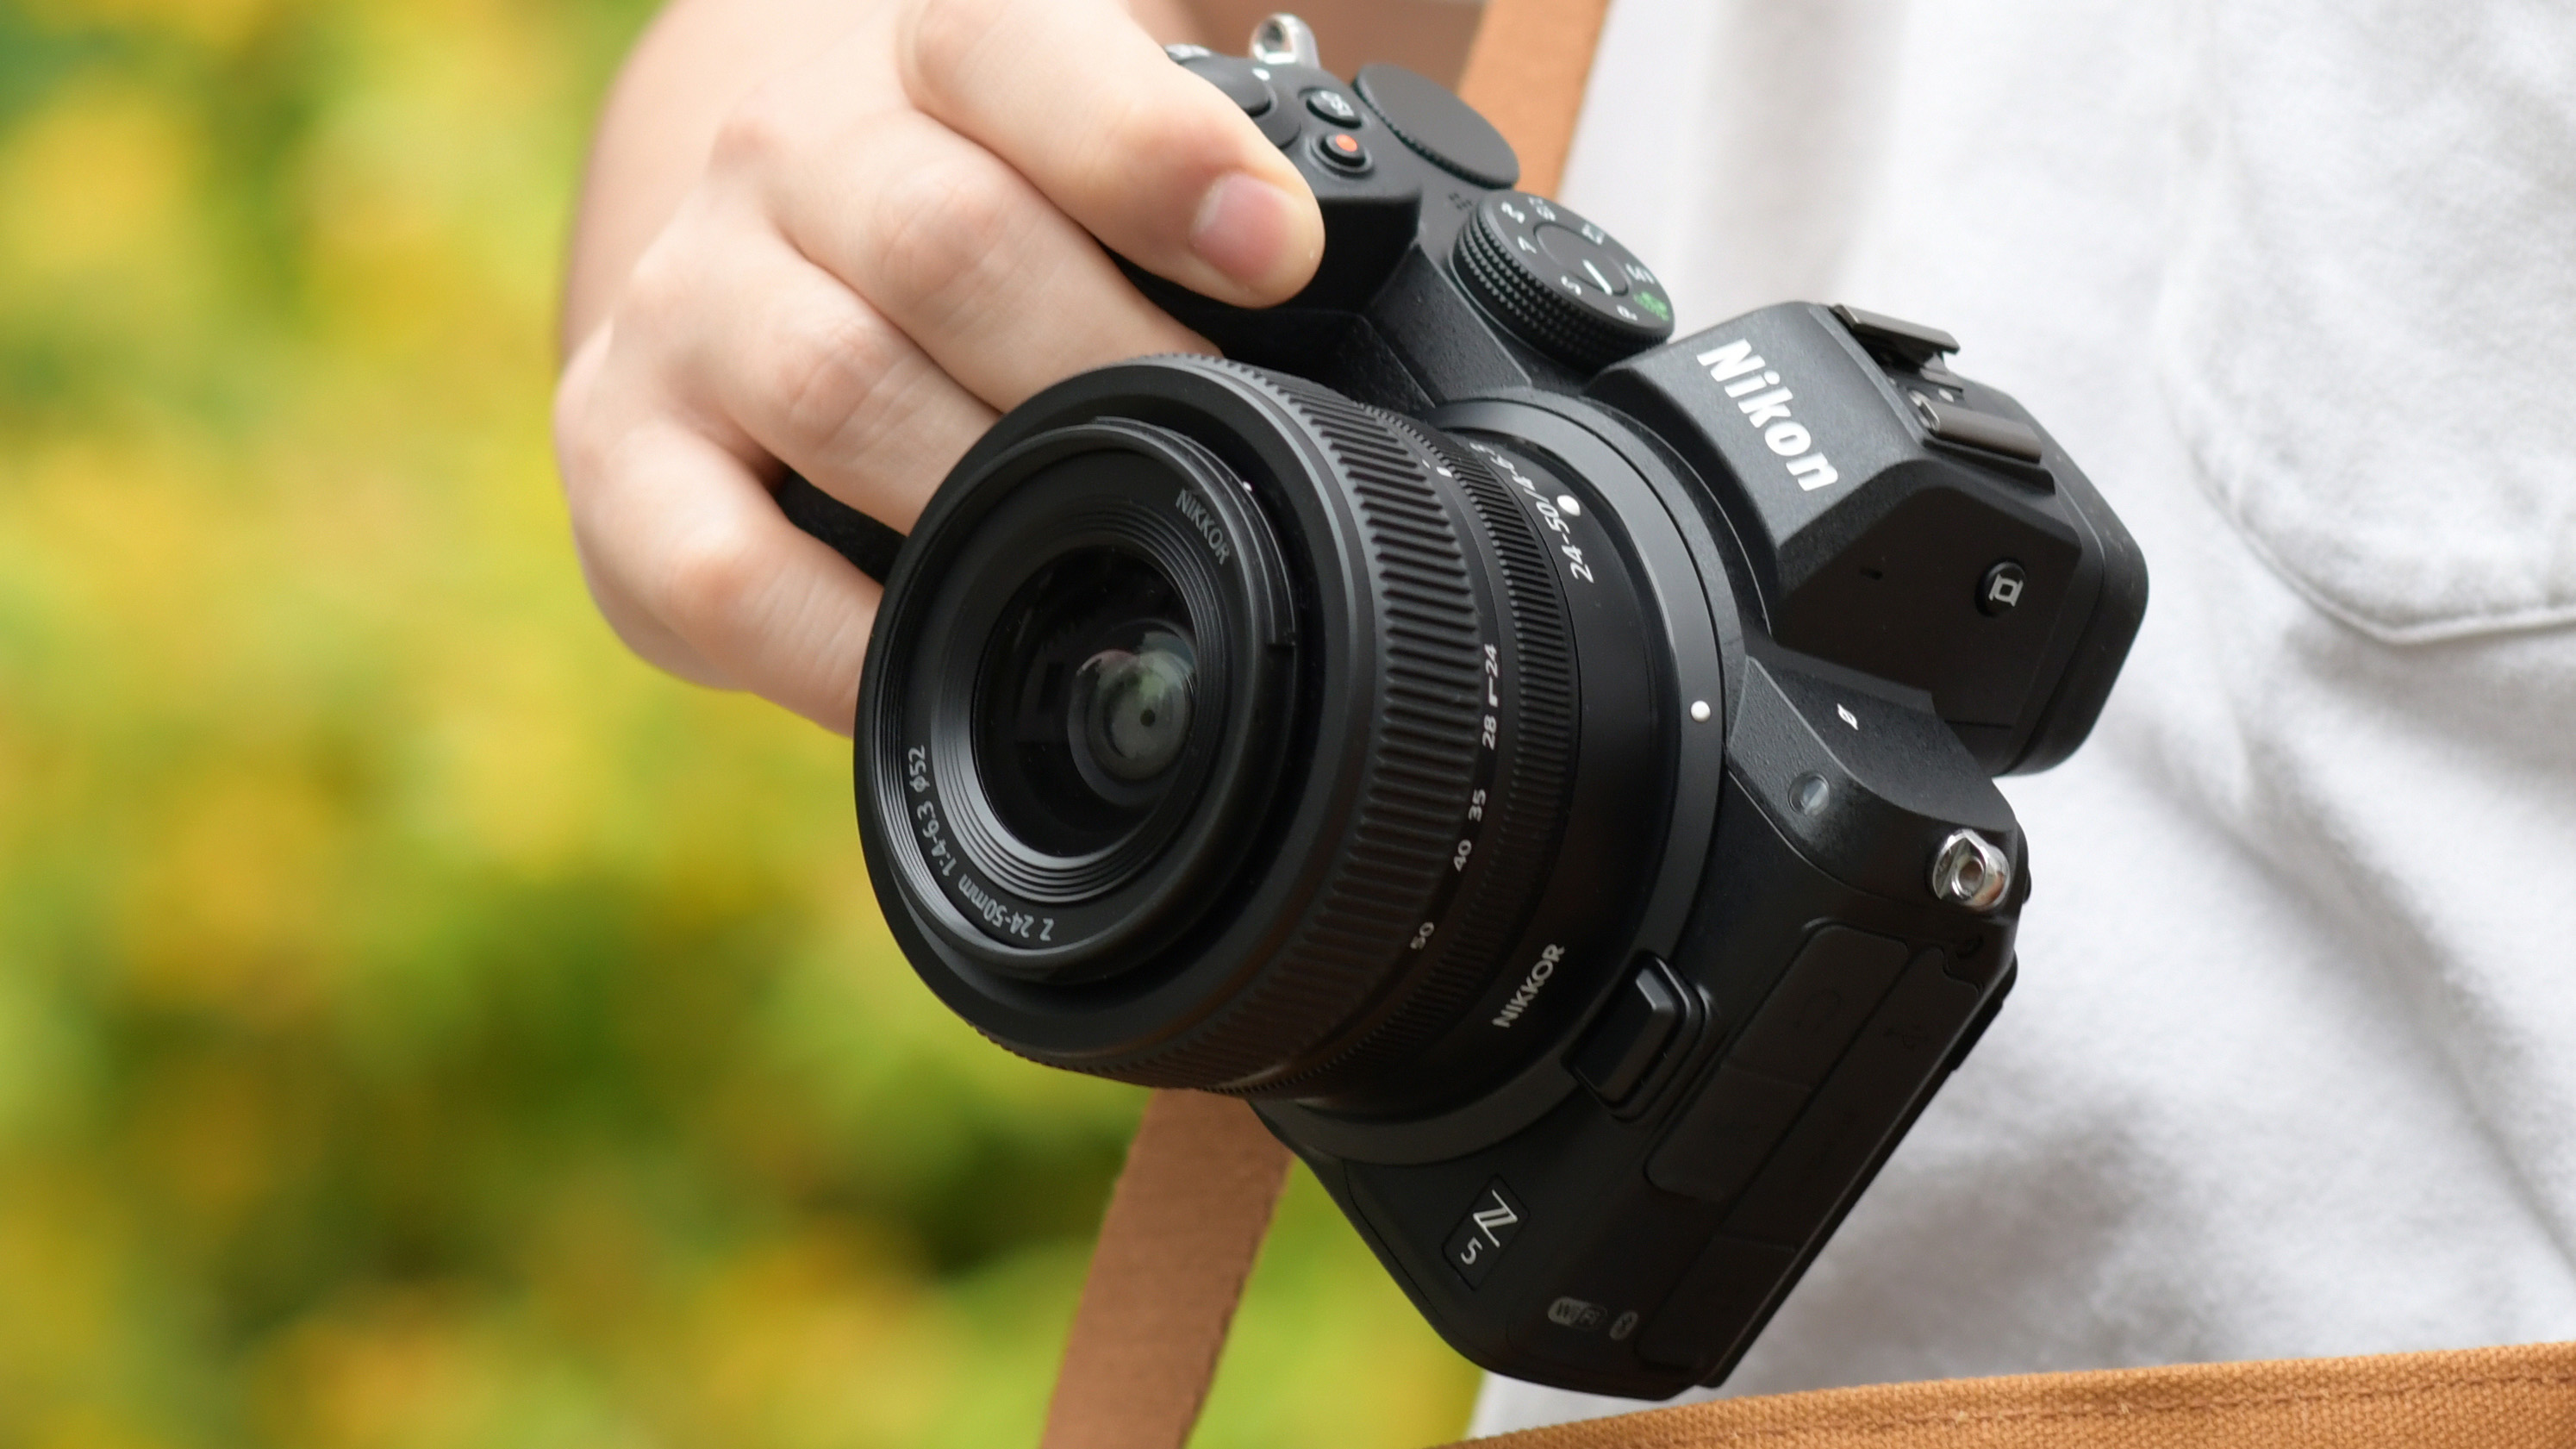 Nikon Z5 24.3MP Full Frame Mirrorless Camera body only